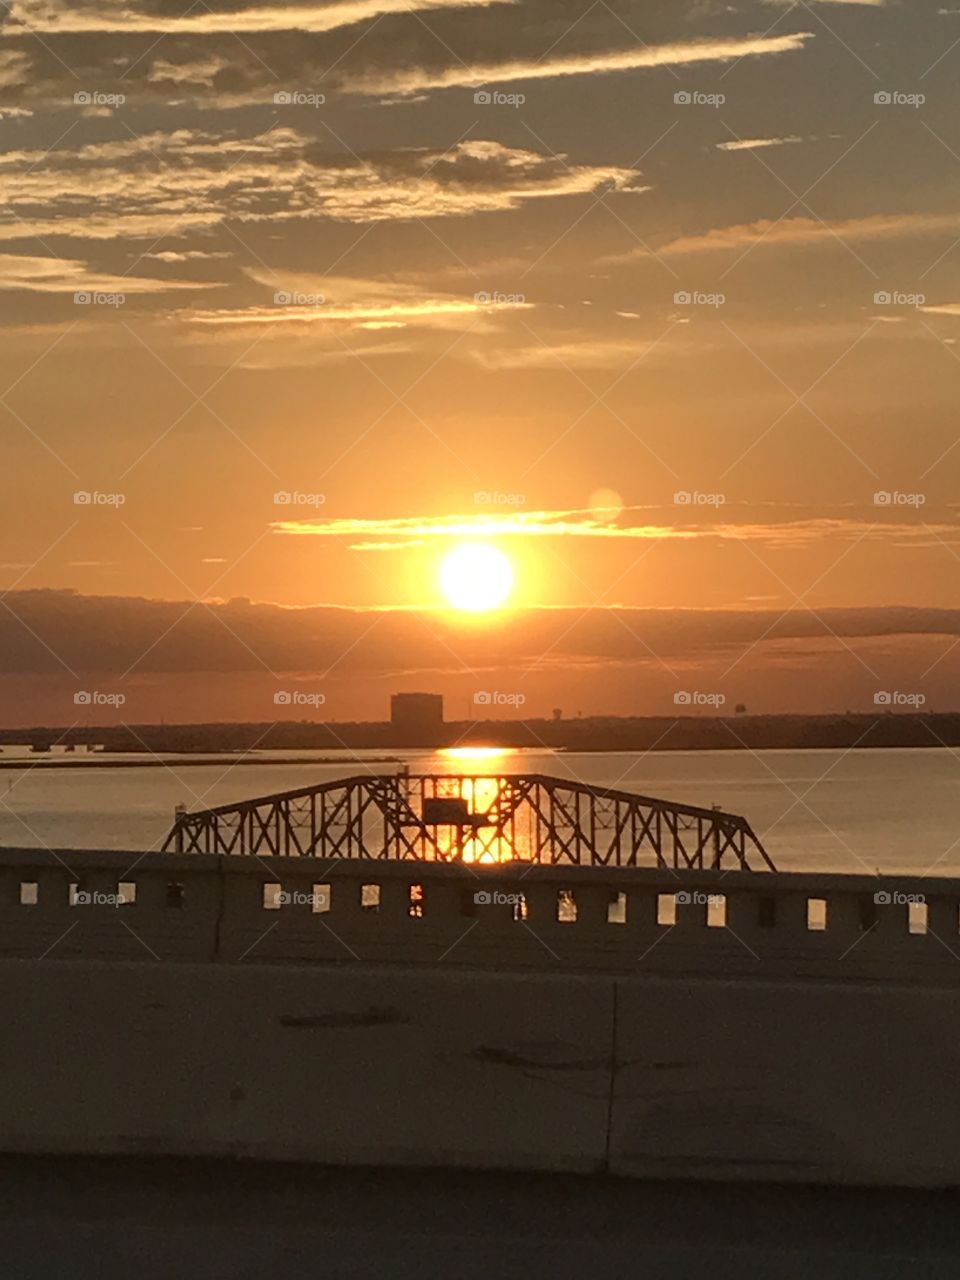 Biloxi, MS sunset 